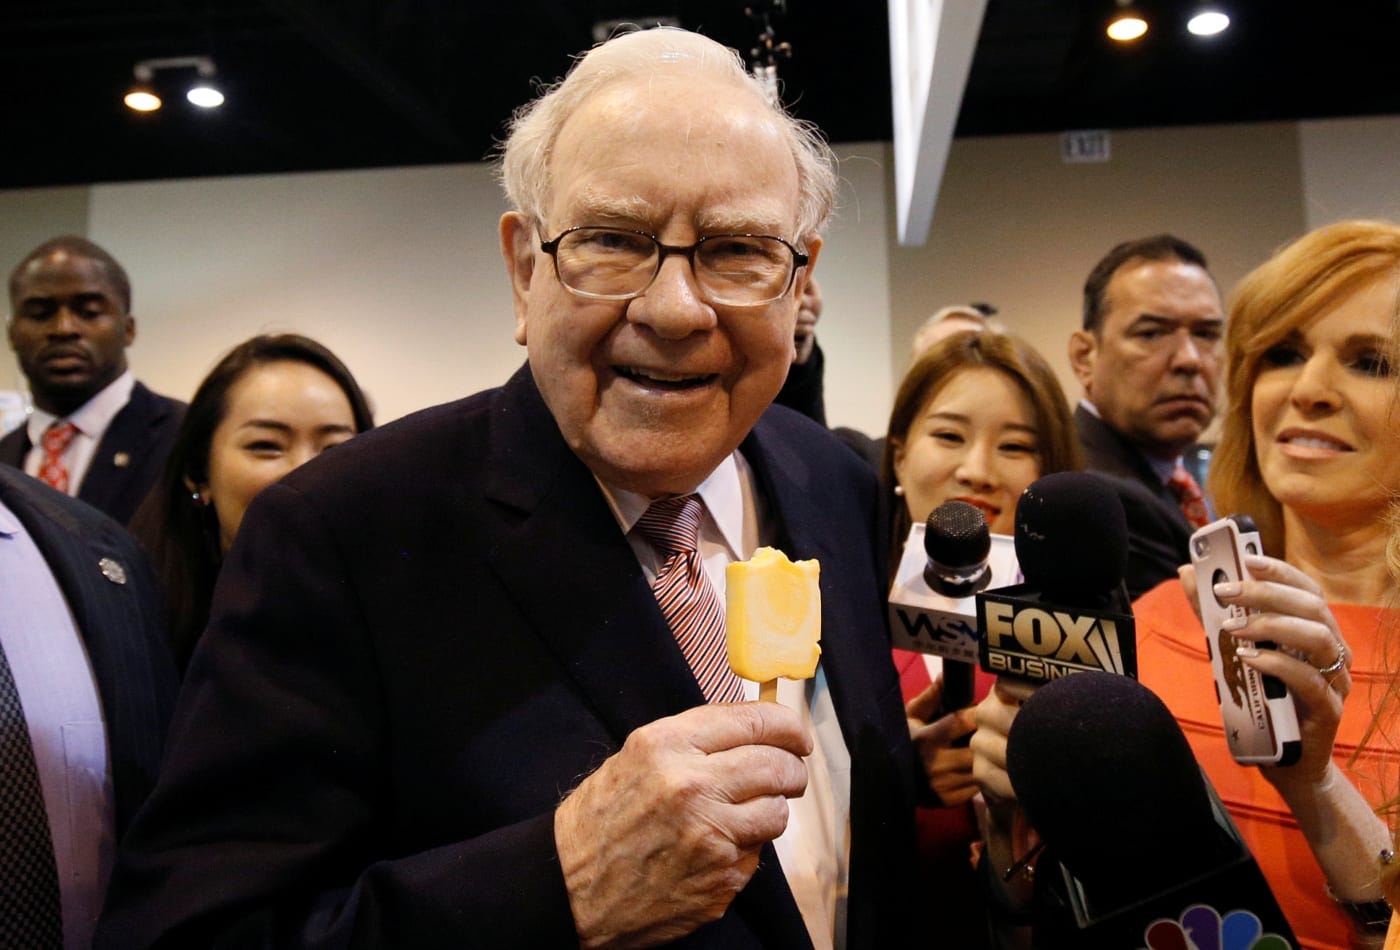 Berkshire Hathaway, de Warren Buffett, realiza investimentos no Japão